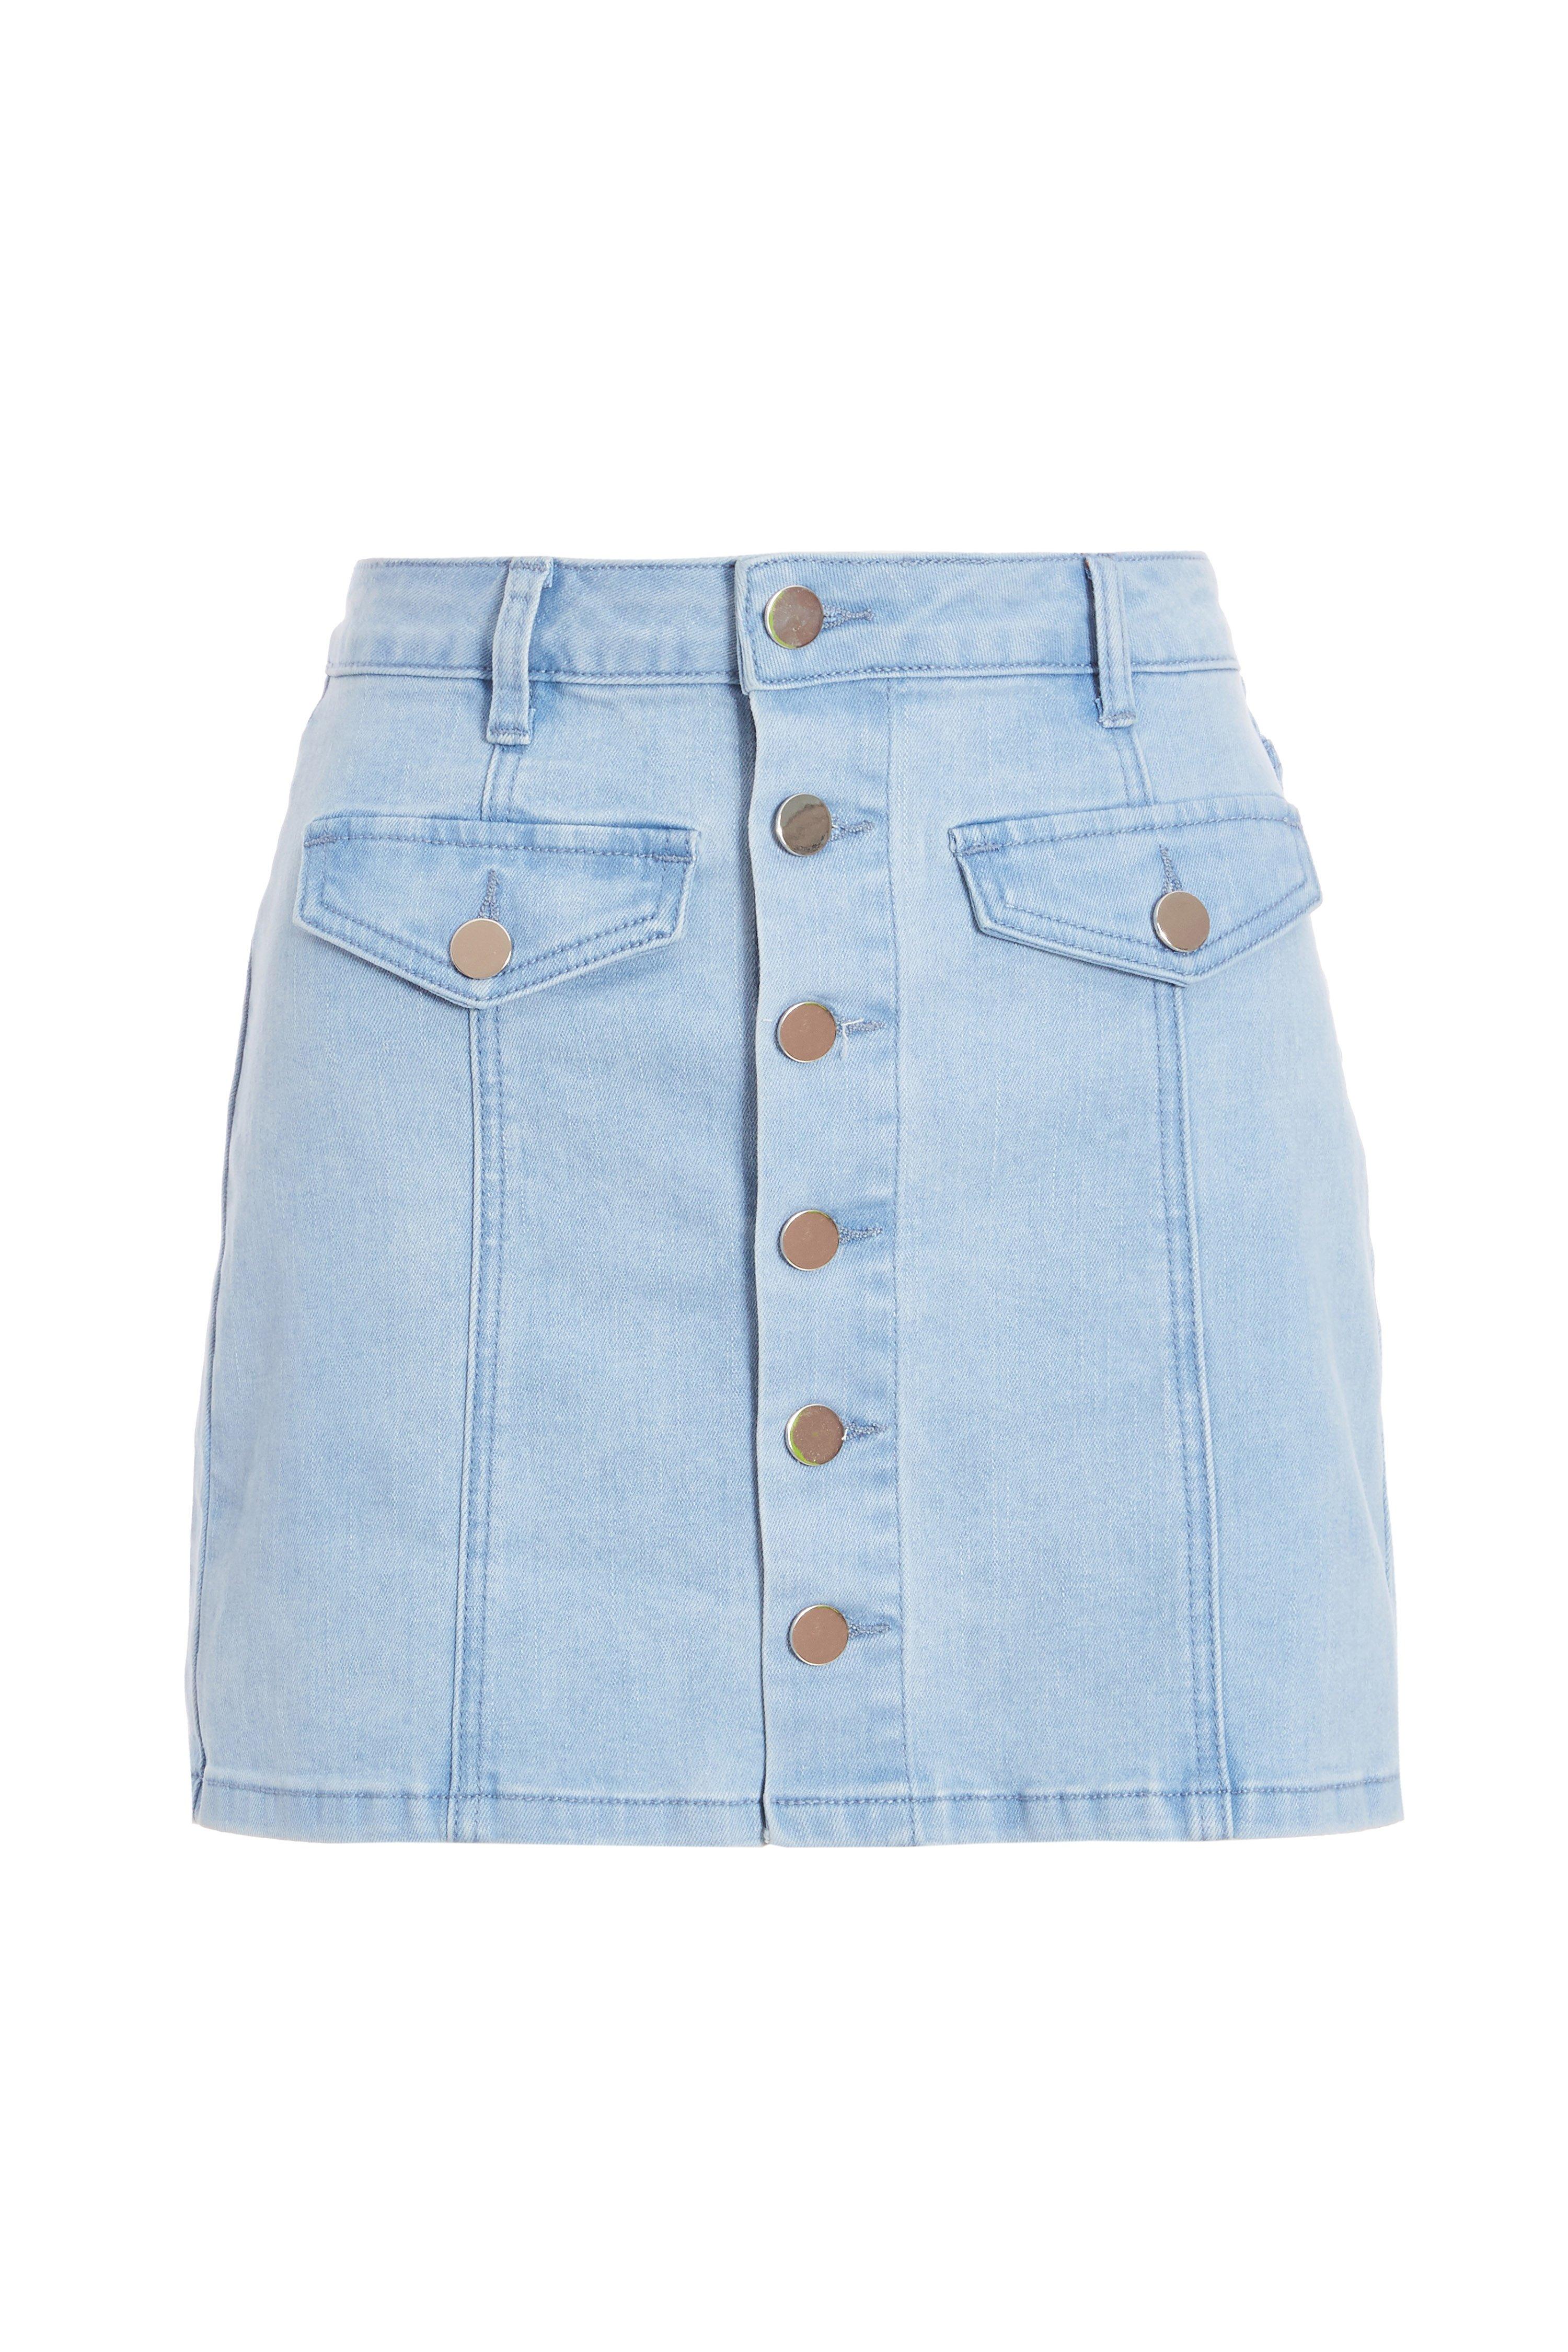 Download Petite Light Blue Denim Button Mini Skirt - Quiz Clothing